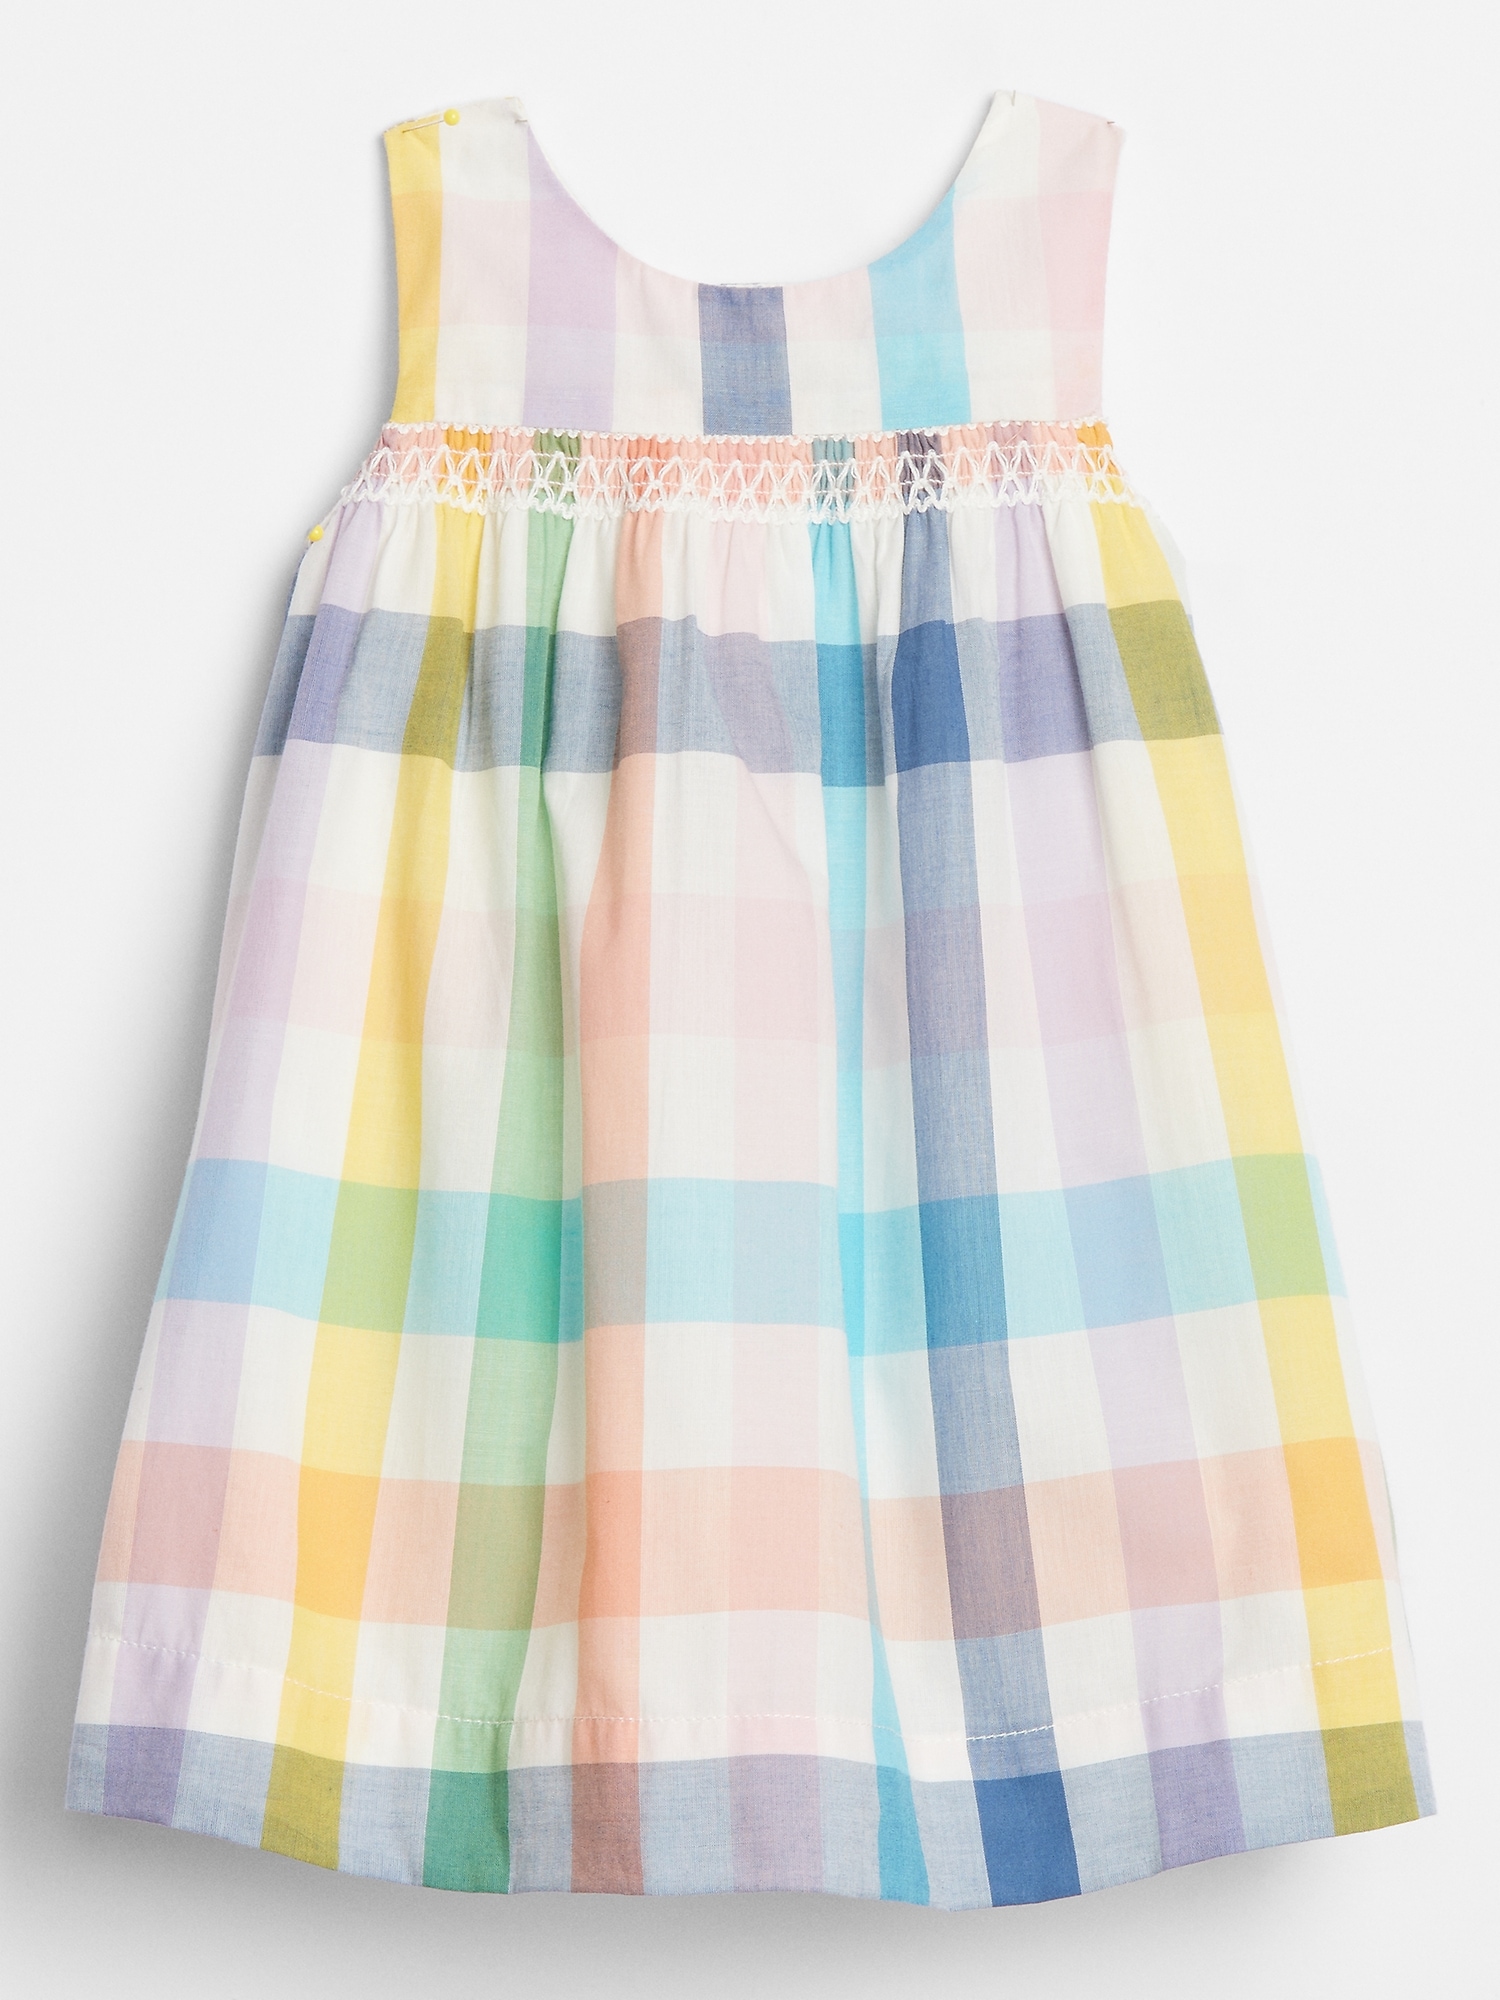 gap plaid dress toddler